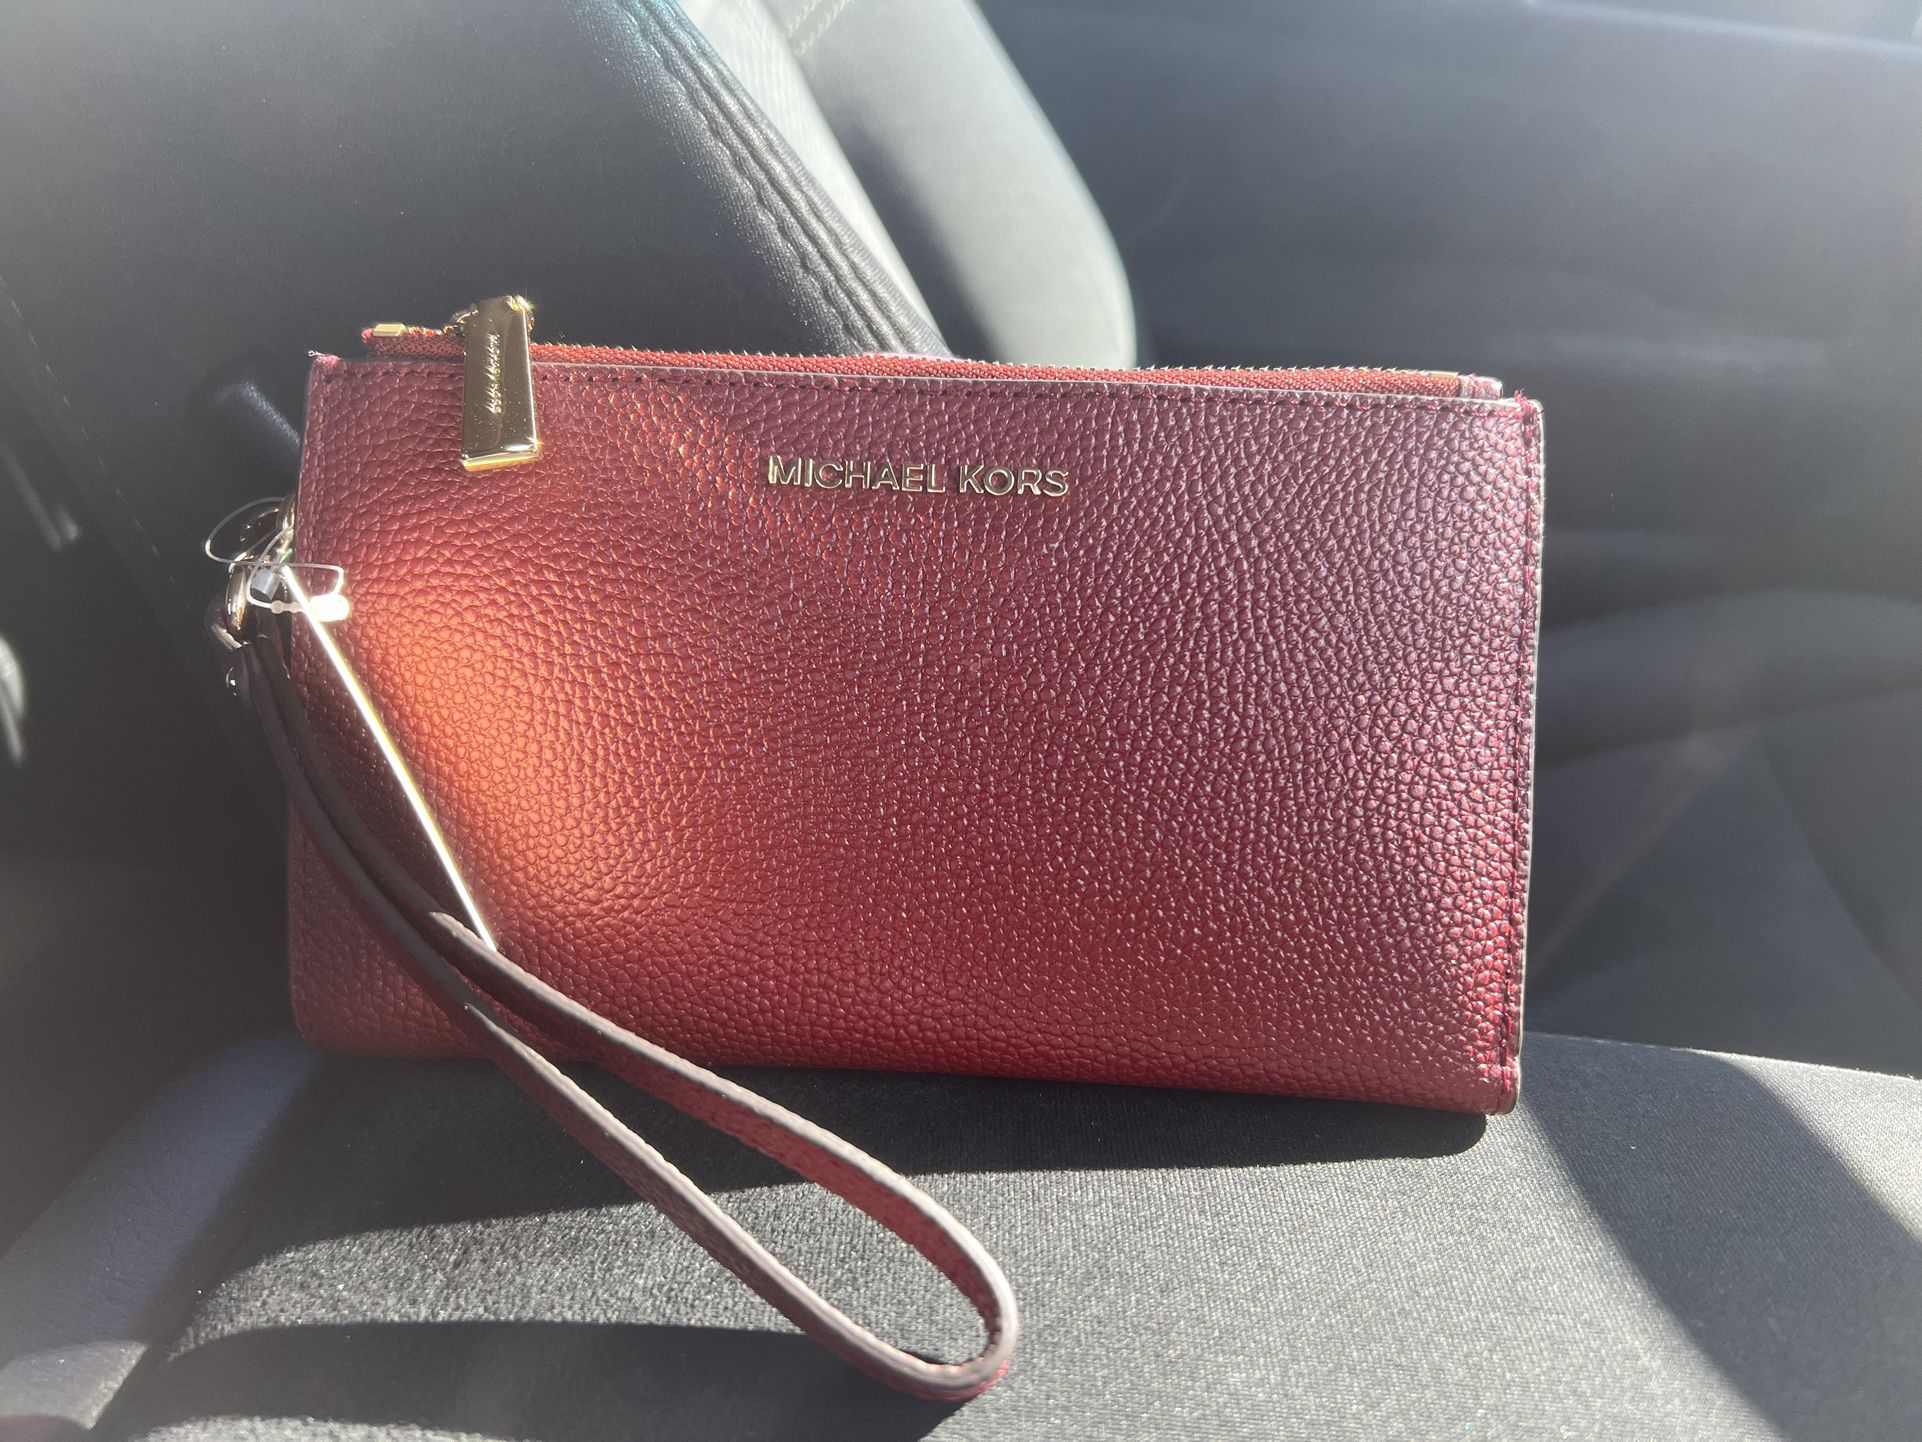 Michael Kors phone wallet/wristlet